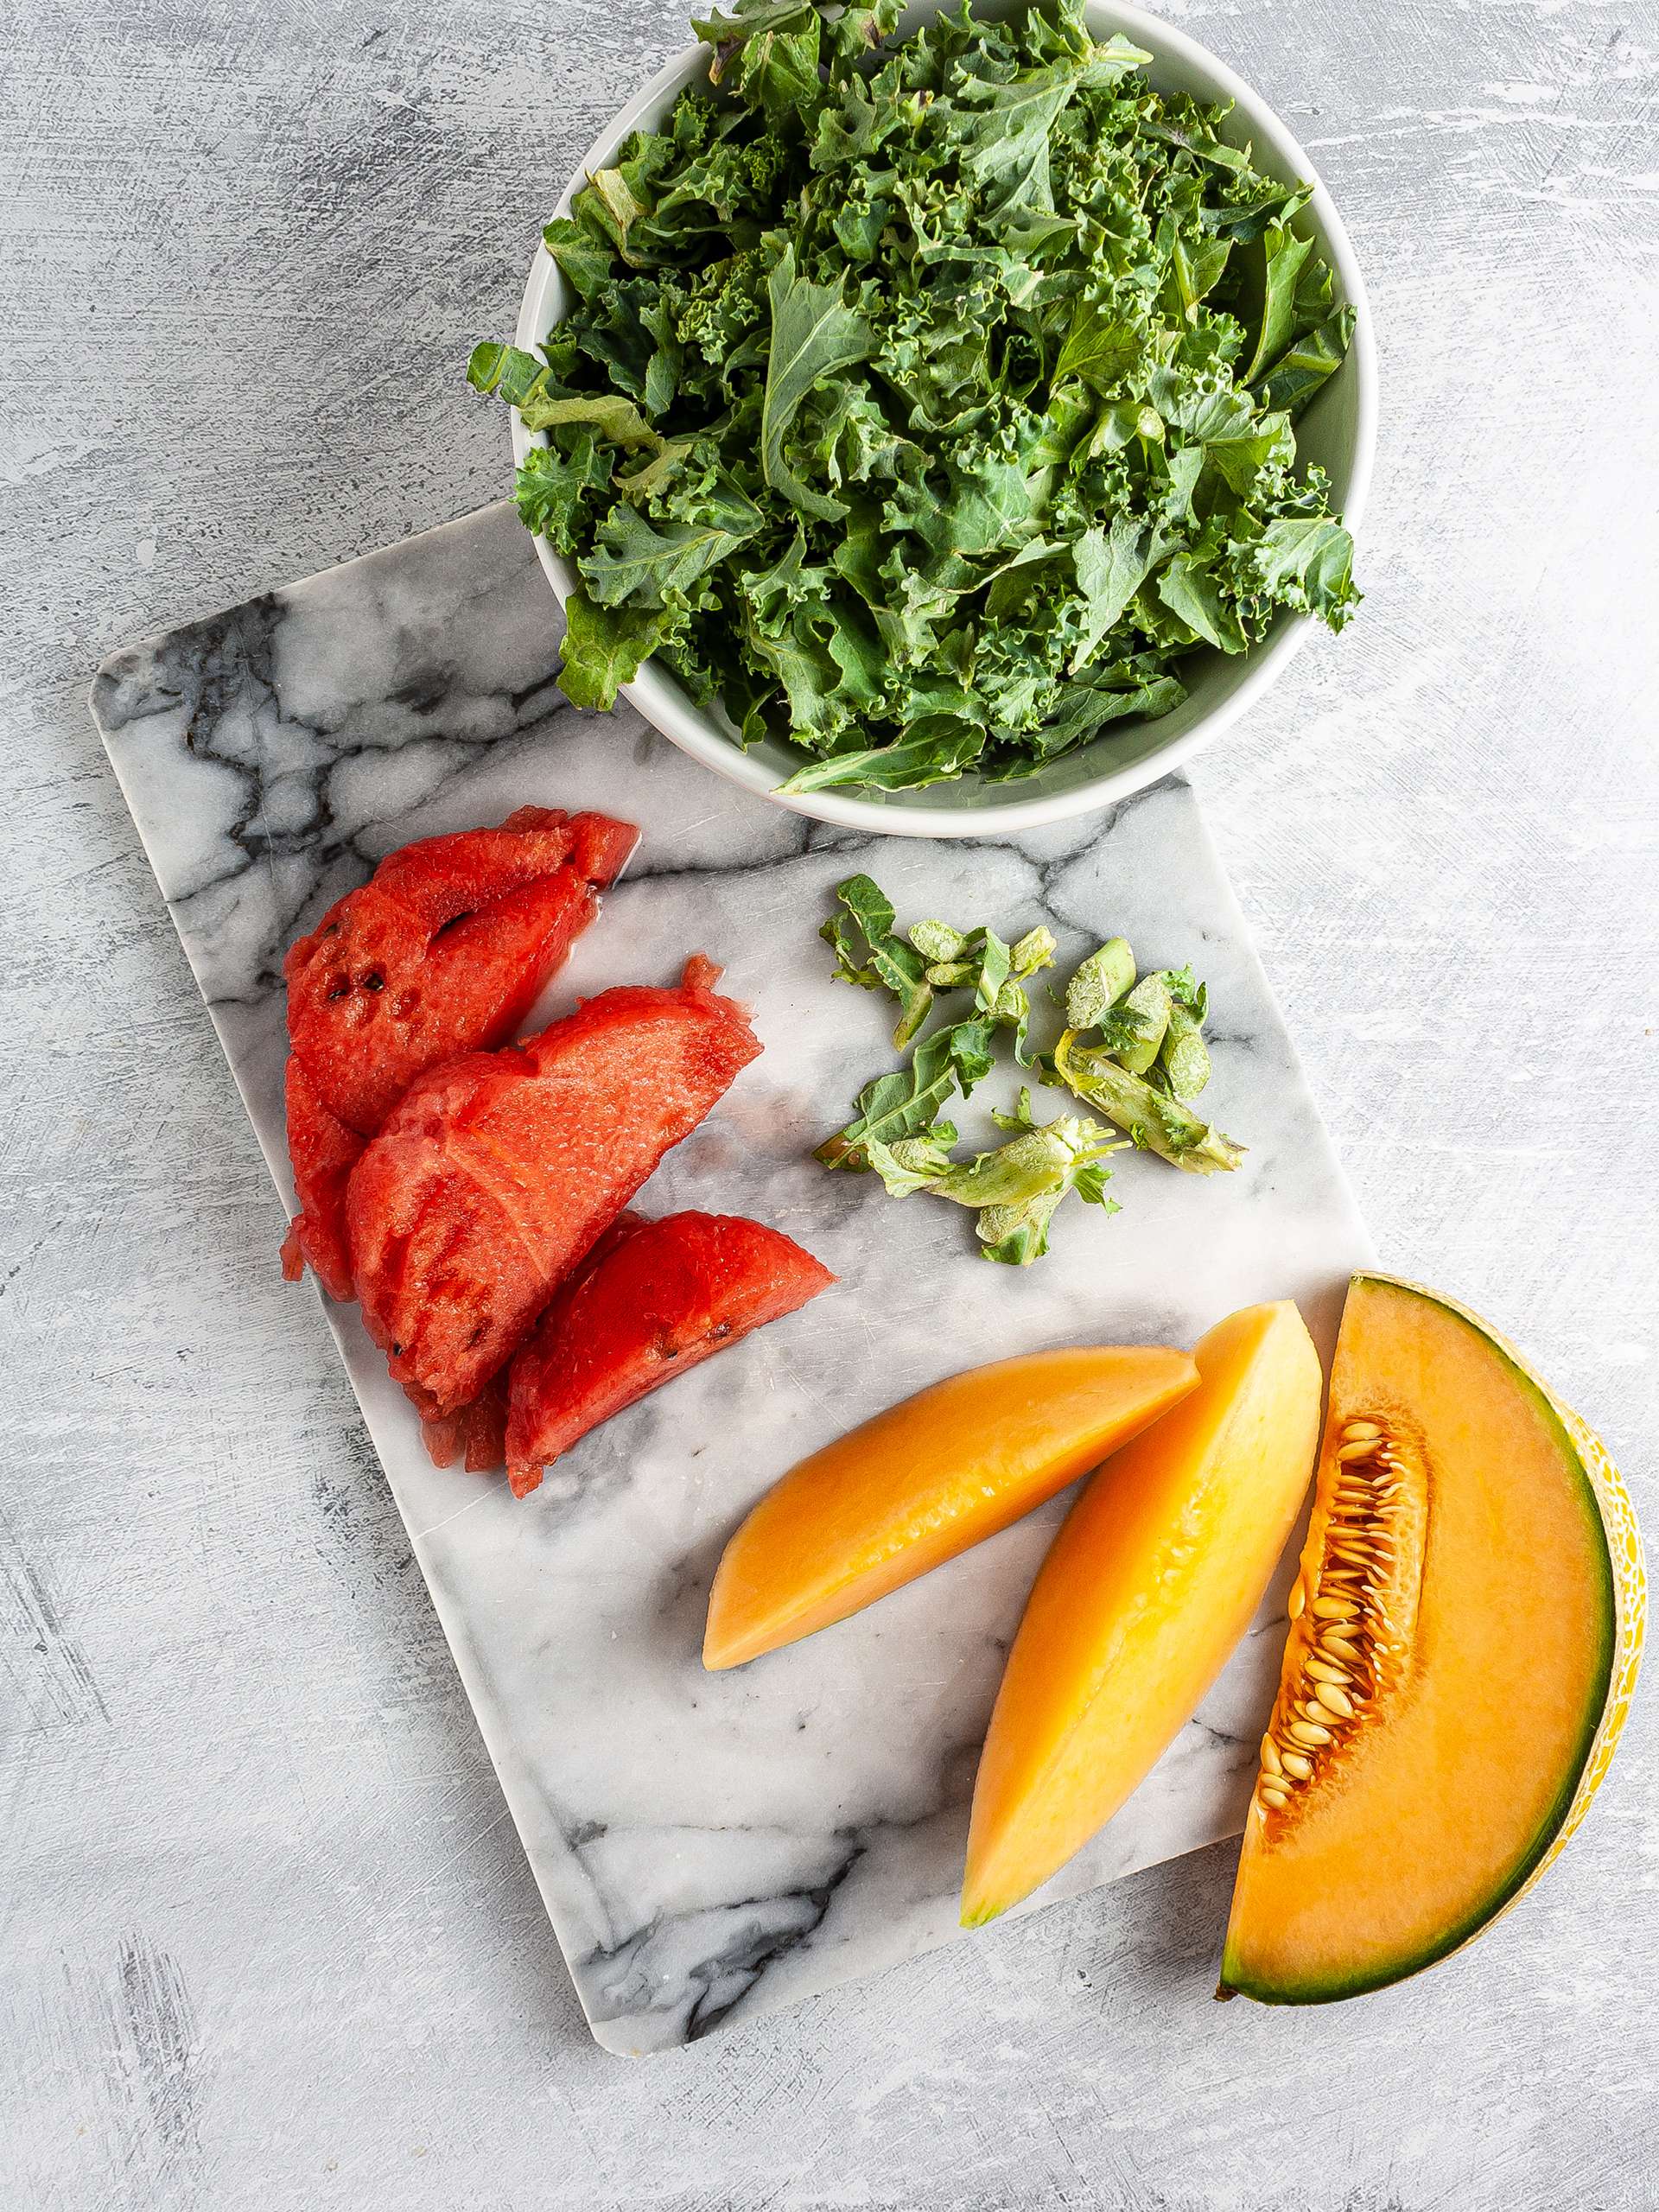 Shredded kale, sliced melon and watermelon